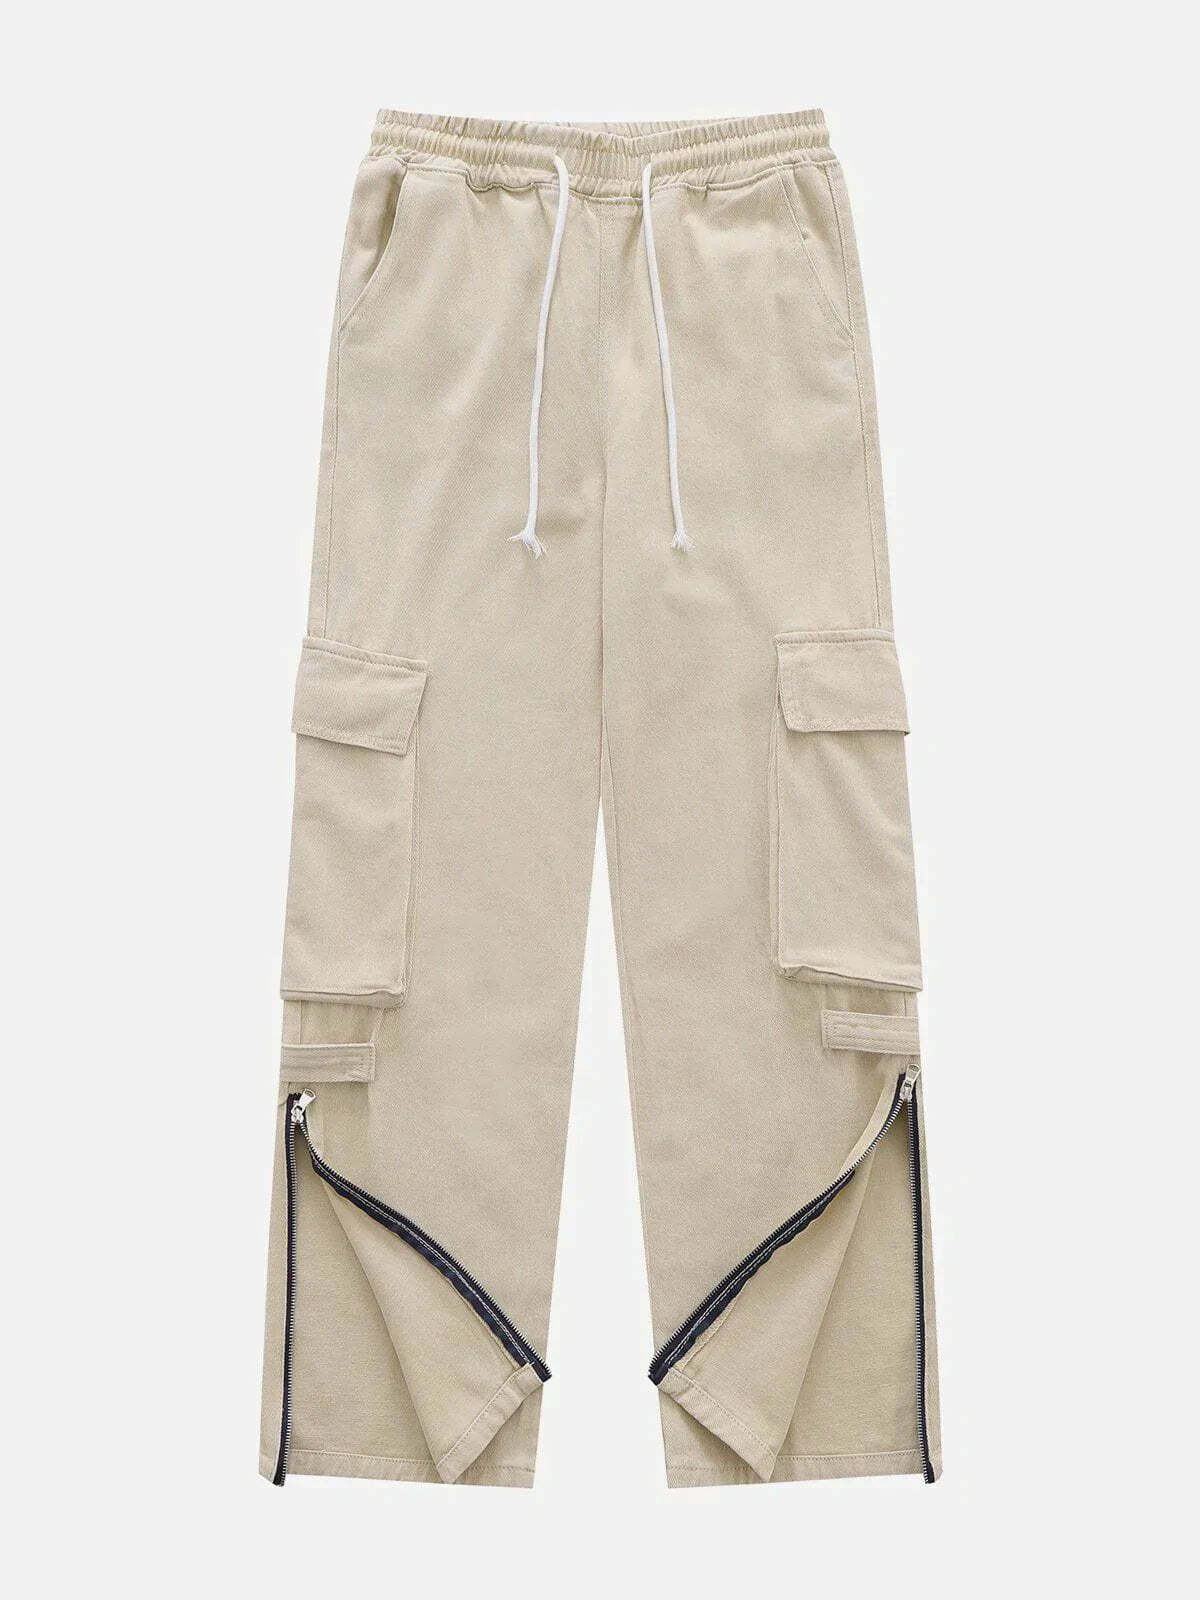 retro zipup pants edgy & vibrant streetwear 2652